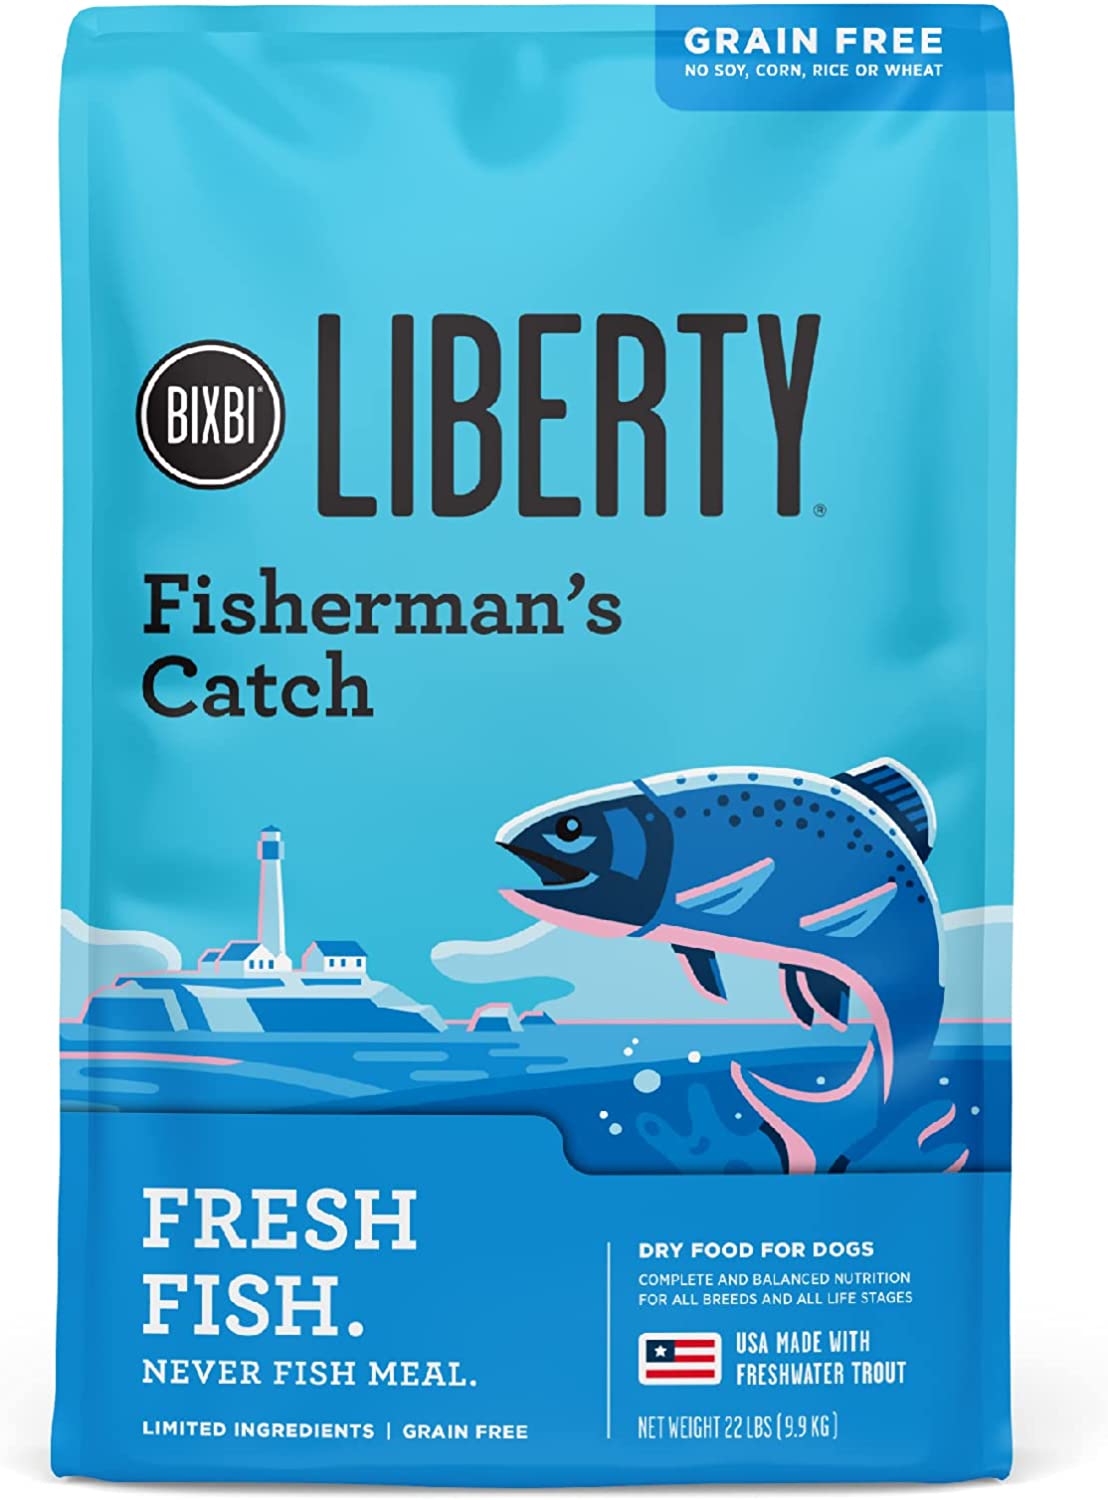 Bixbi Liberty Fisherman’s Catch